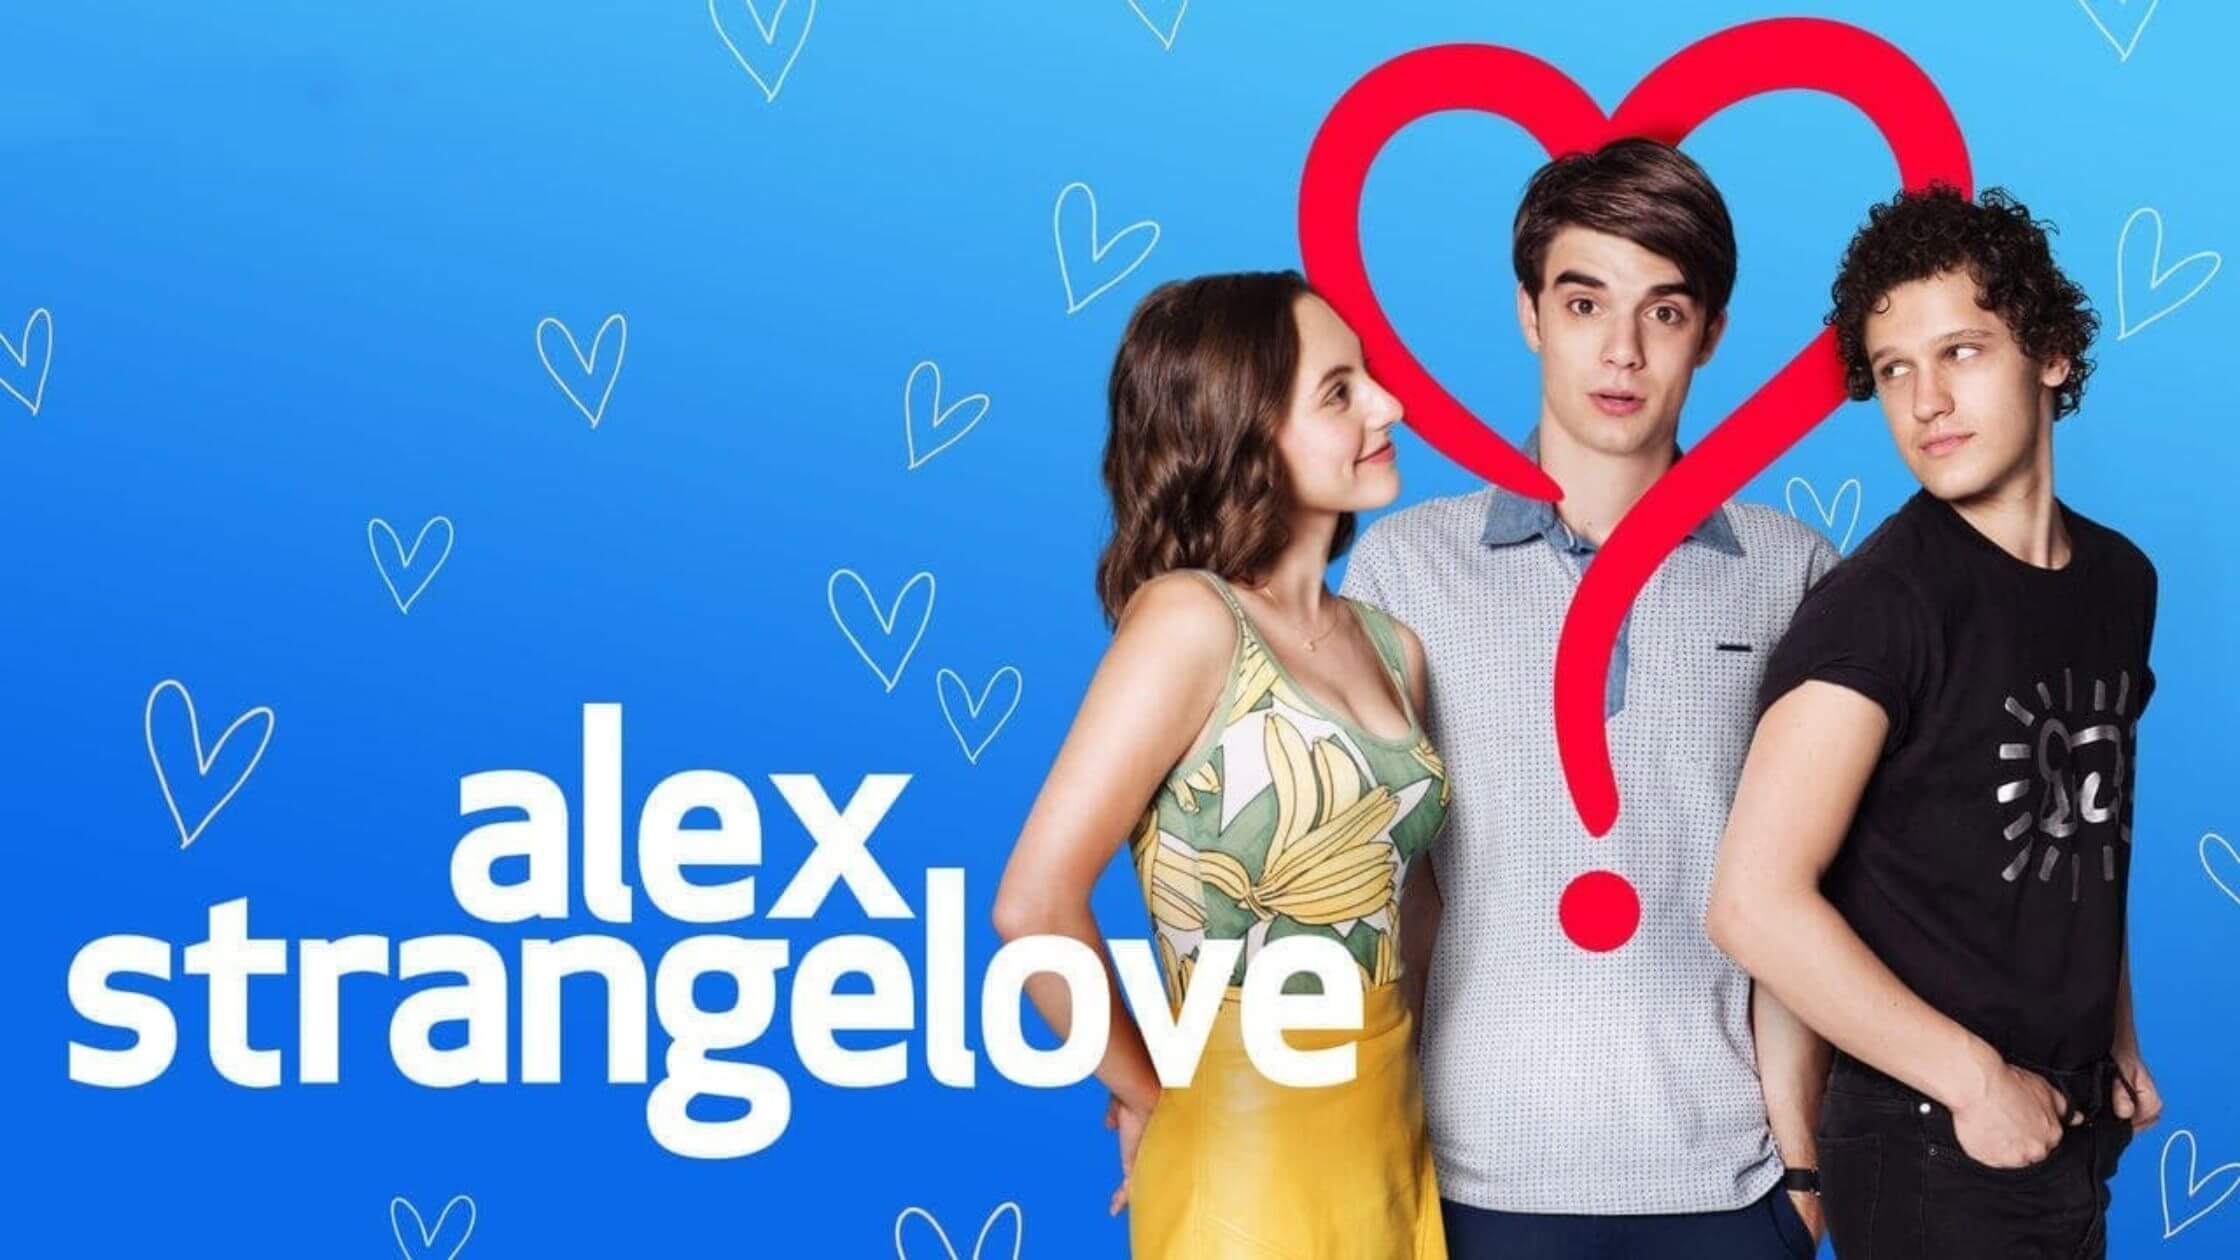 Alex strange love